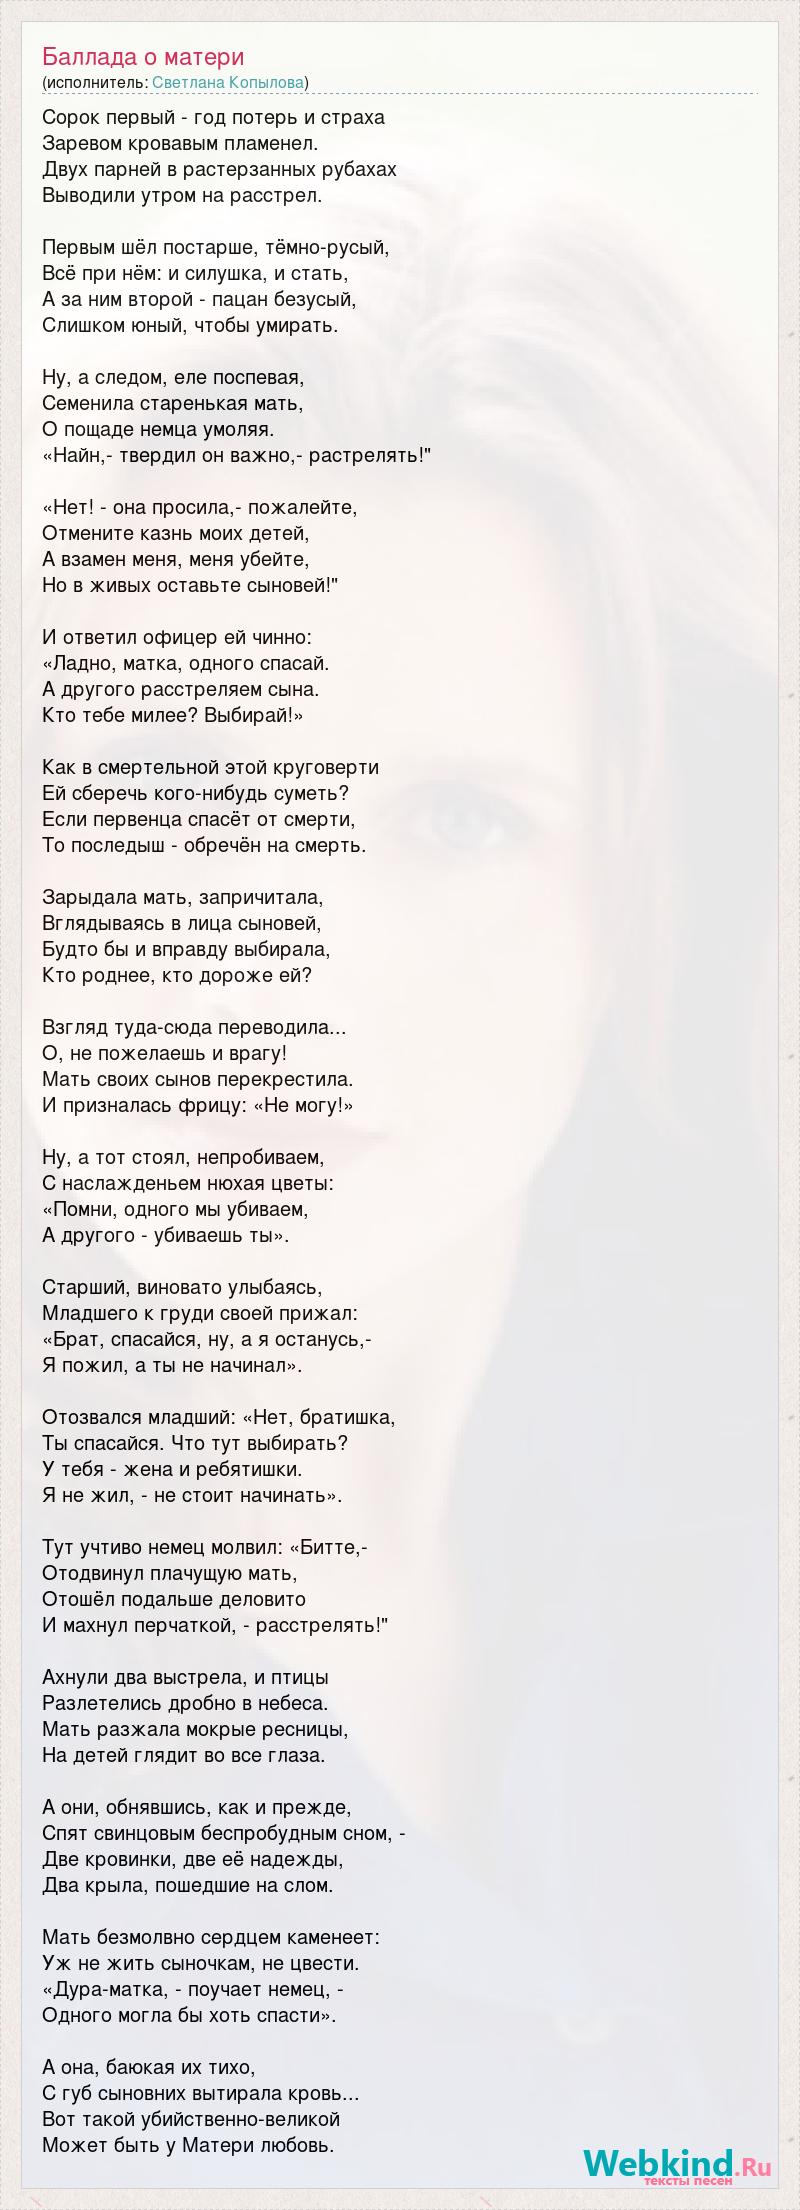 Эдуард Успенский - стихи про маму